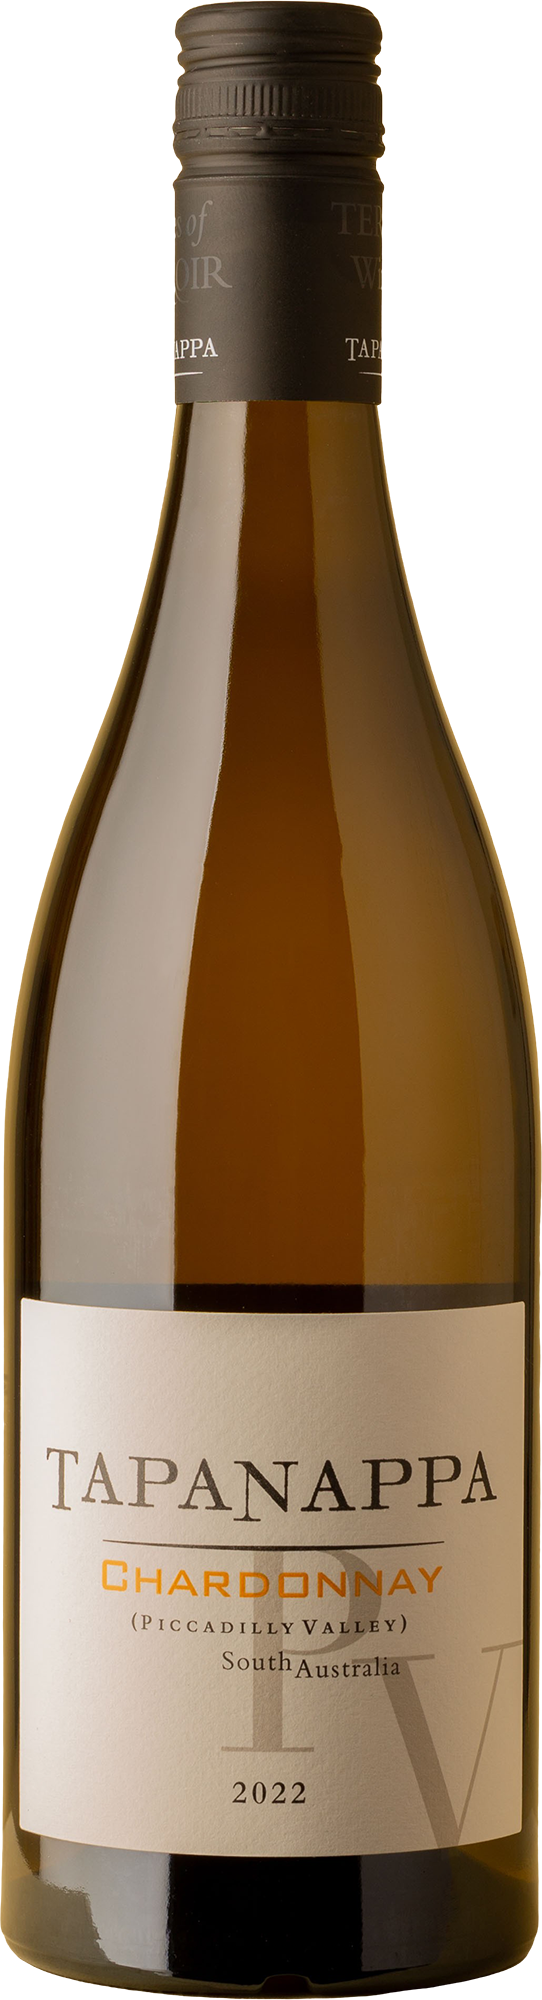 Tapanappa - Piccadilly Valley Chardonnay 2022